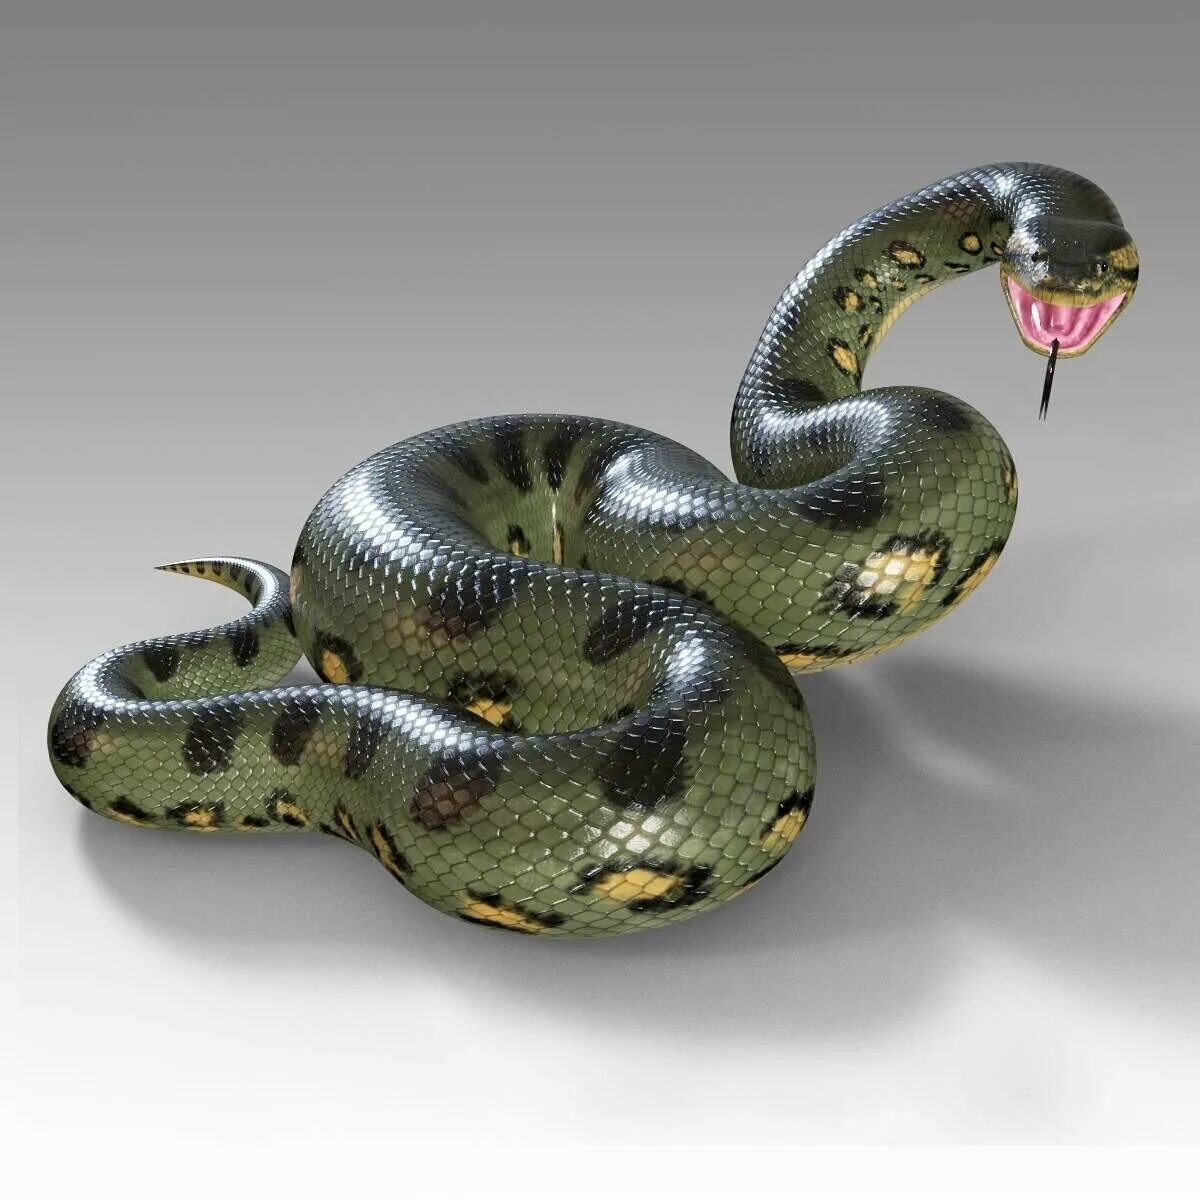 Анаконда змея. Зеленая Анаконда (eunectes murinus). Змеи титана боа и Анаконда. Питон ТИТАНОБОА.